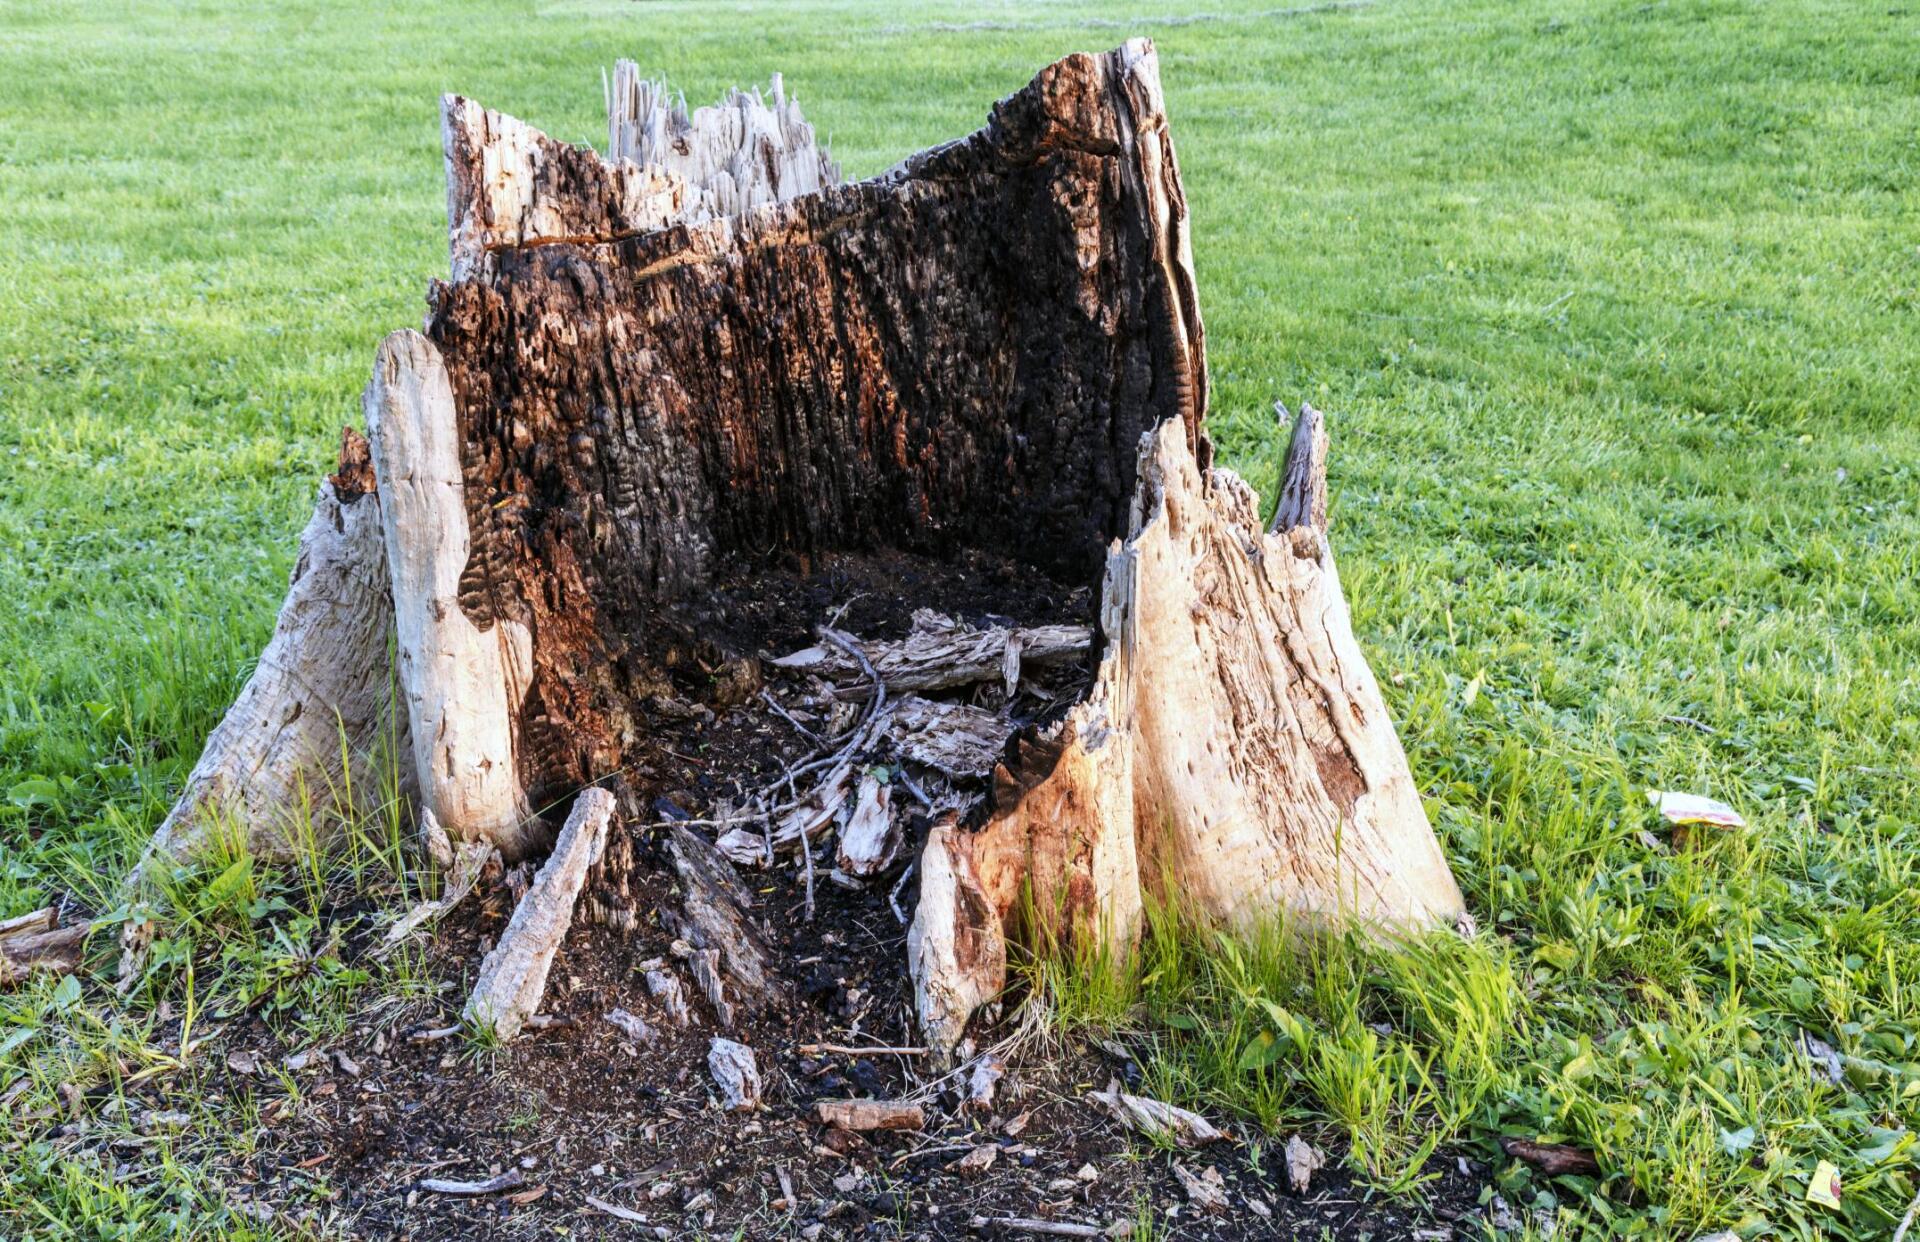 a ruined dry tree stump